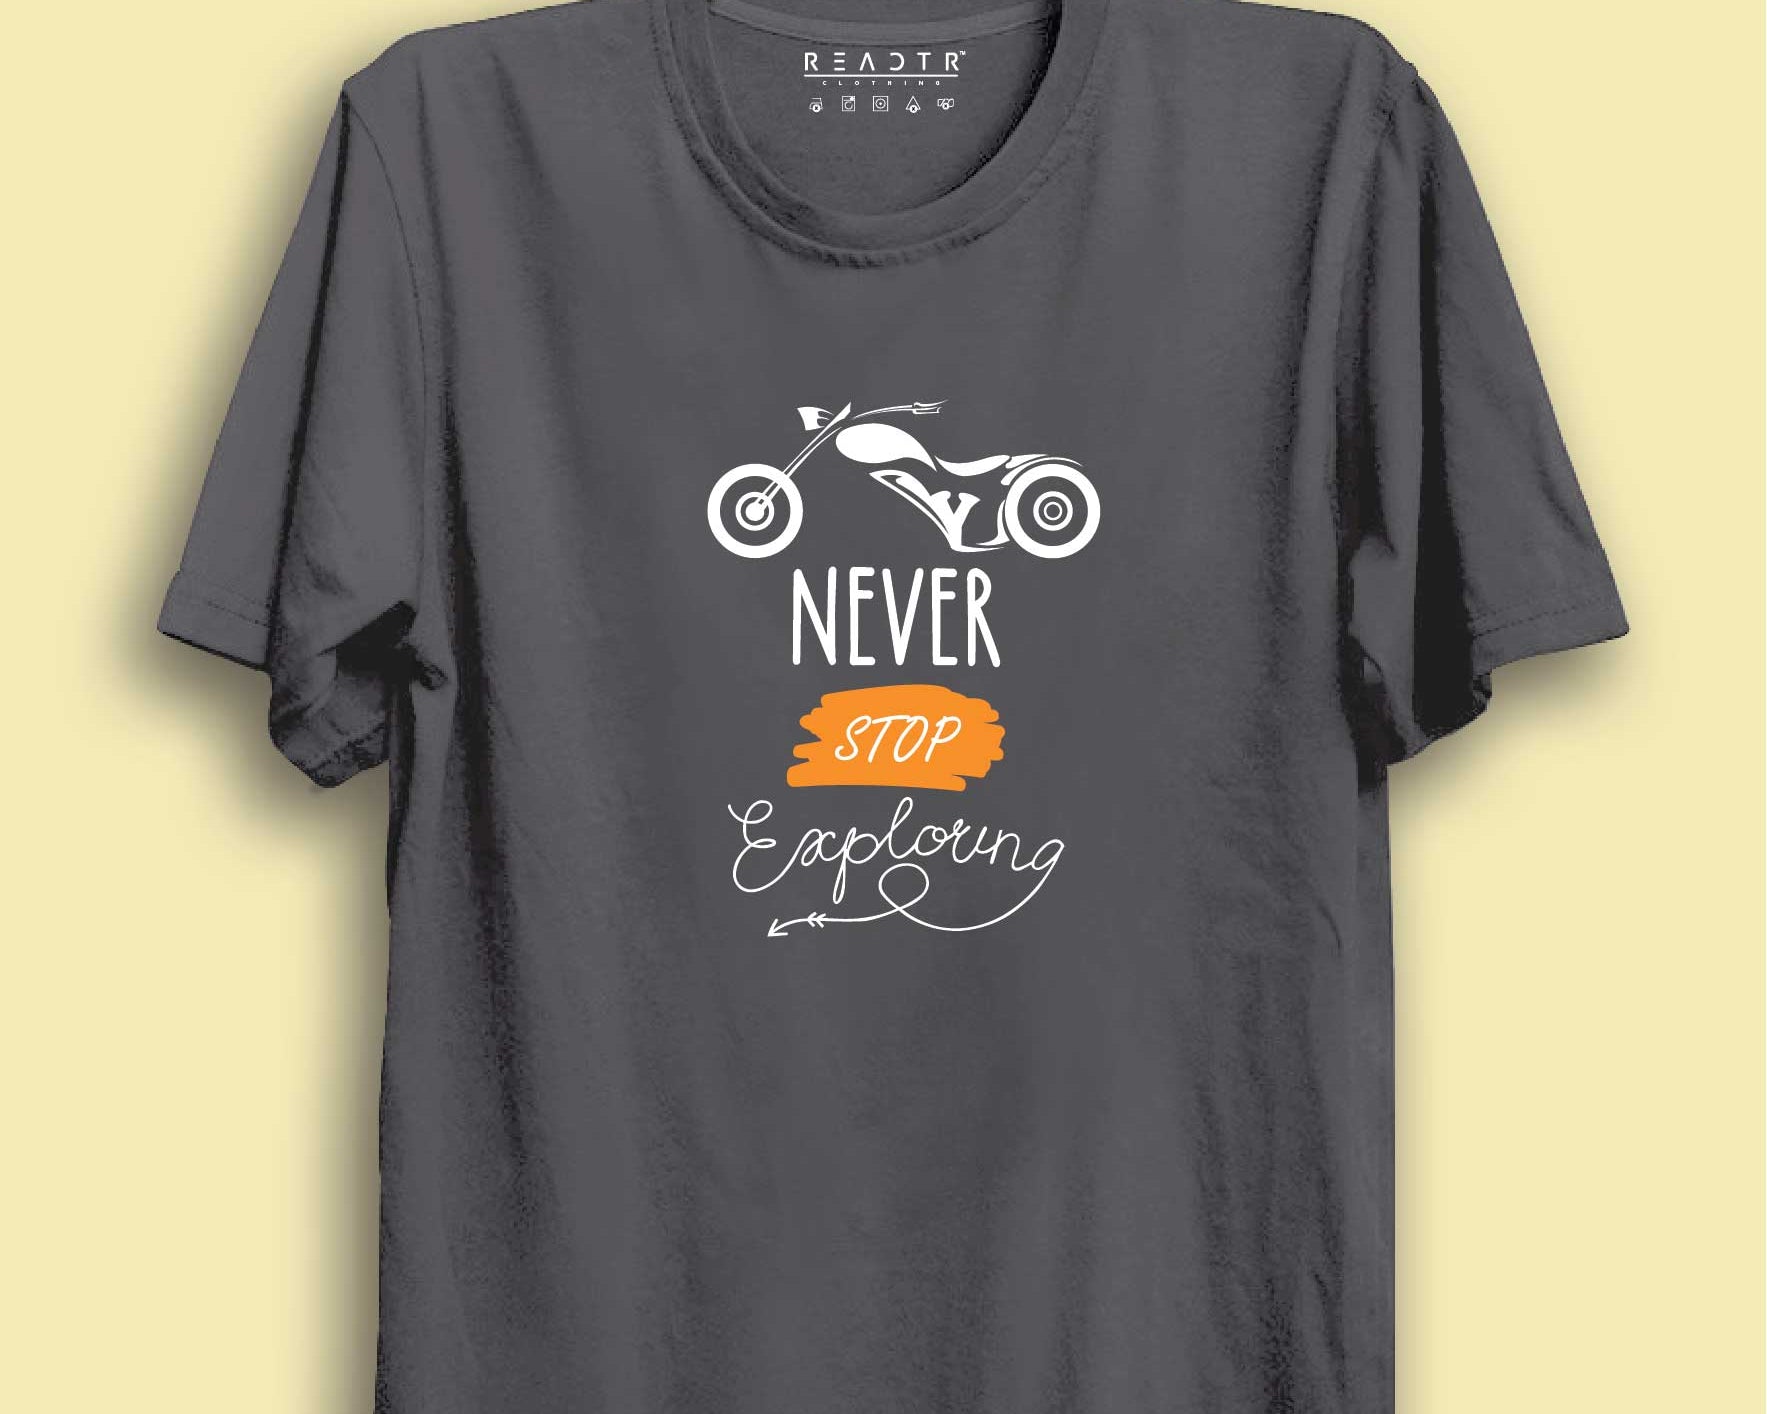 Never Stop Exploring Reactr Tshirts For Men - Eyewearlabs